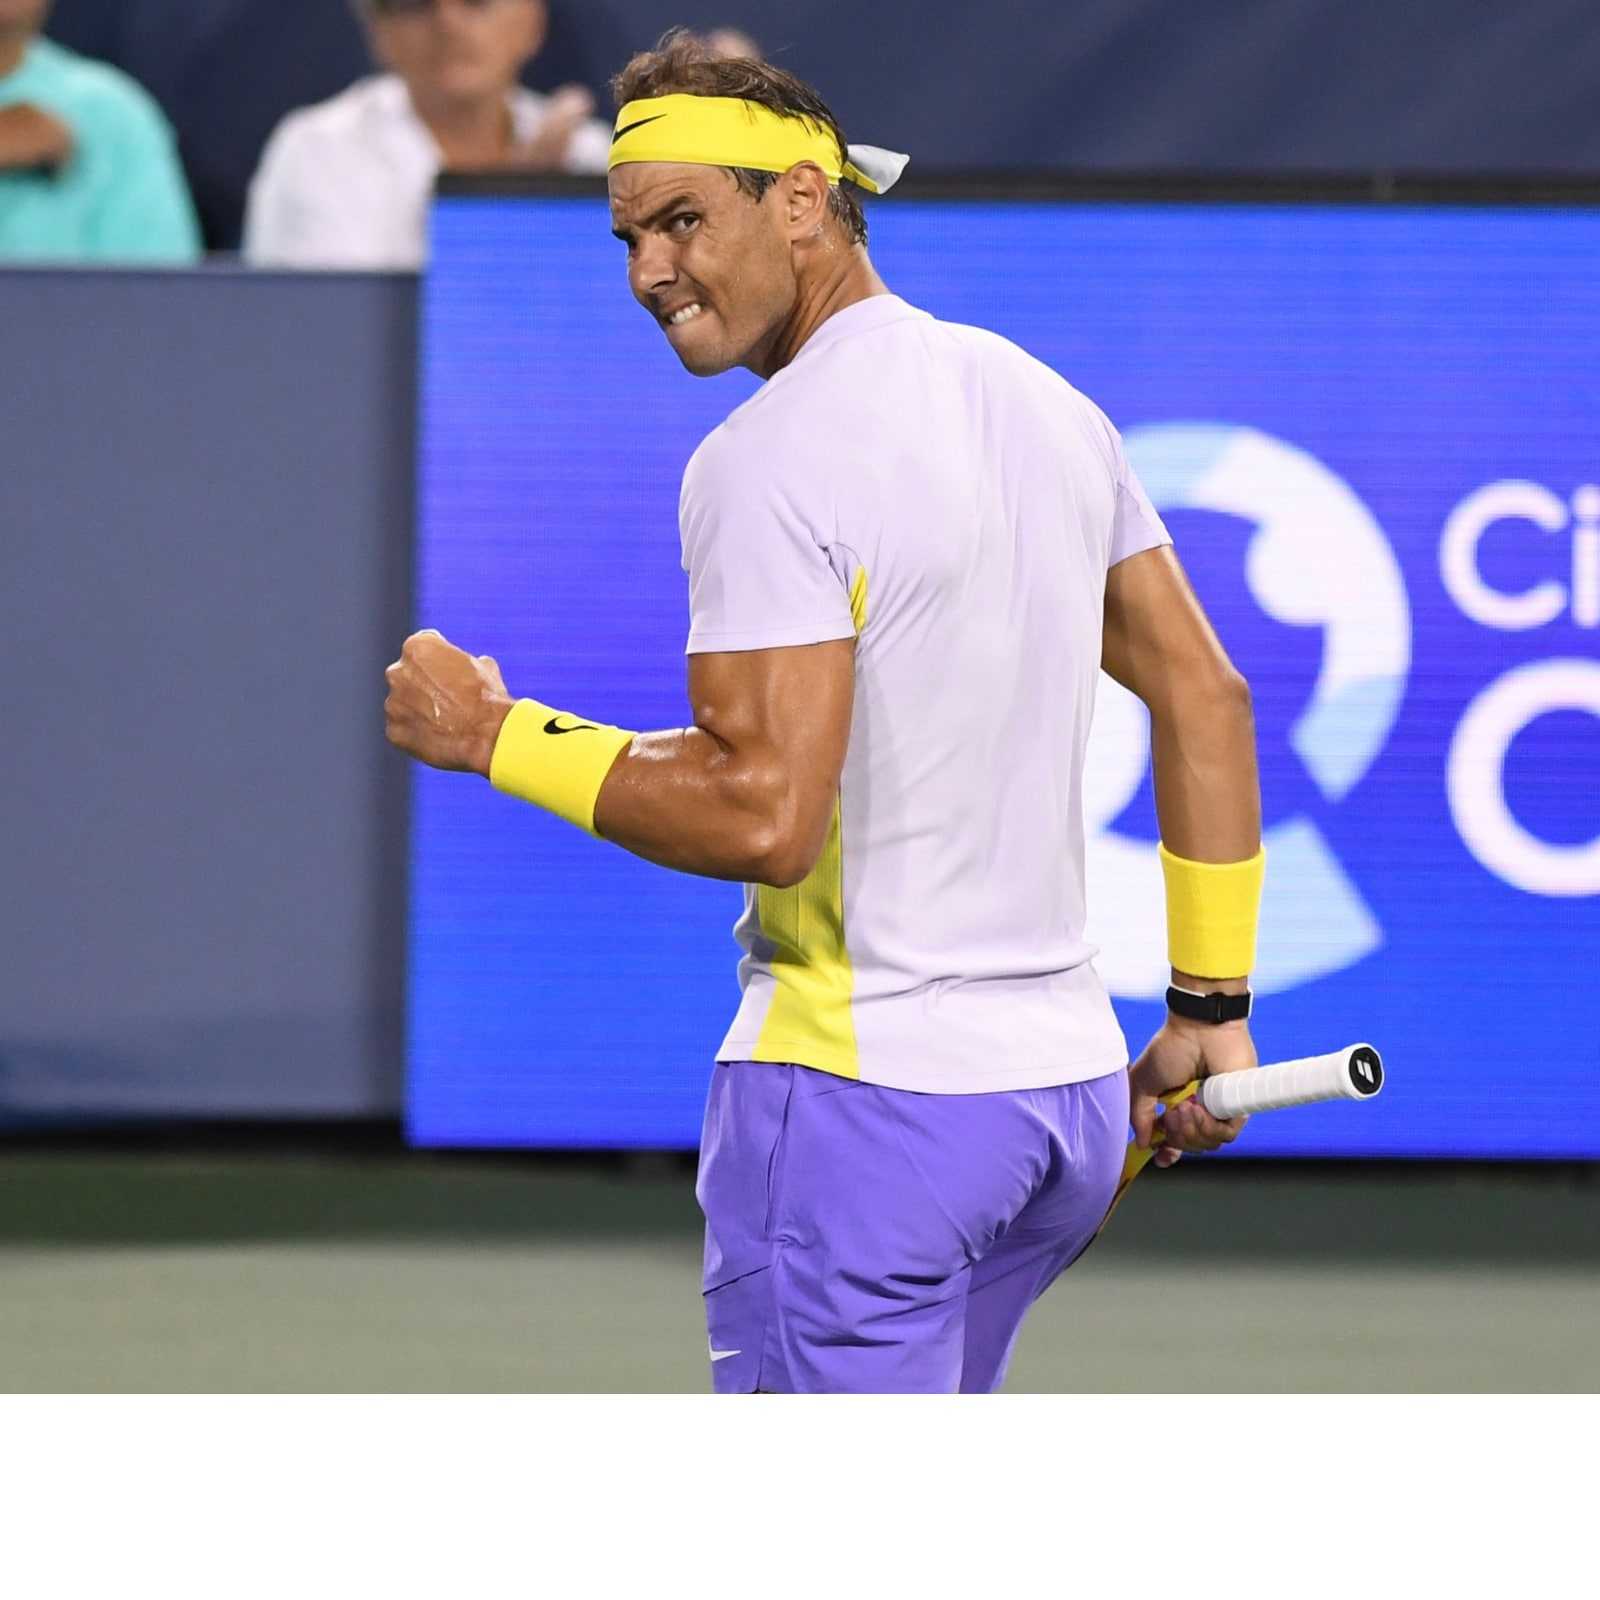 Need to Practice Rafael Nadal after Shock Loss to Borna Coric at Cincinnati Masters